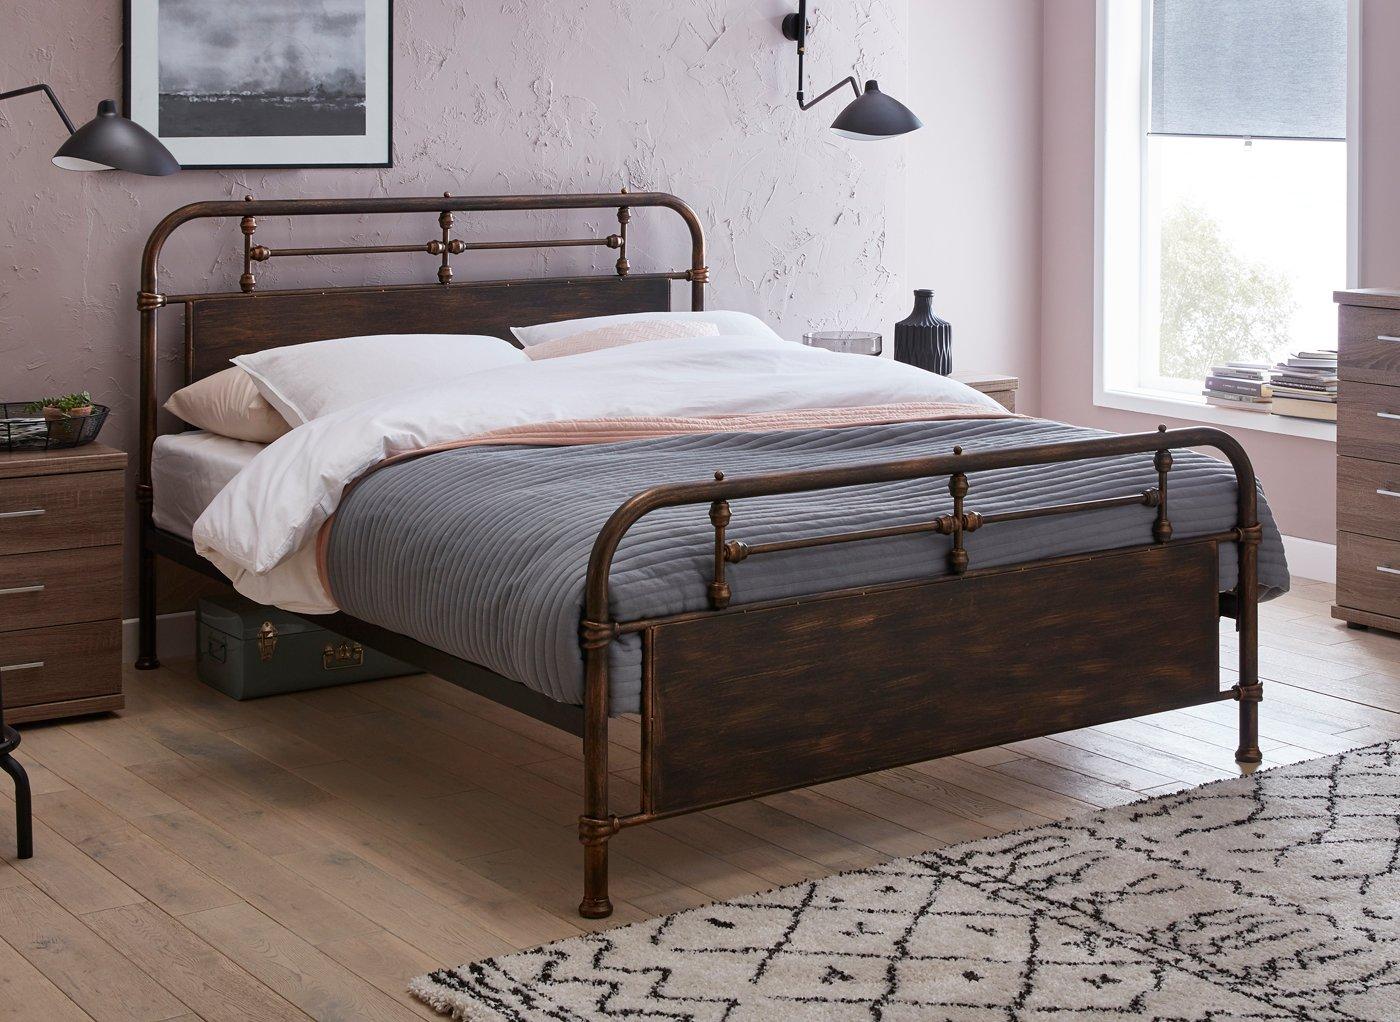 Nixson D Black Metal Bed Sprung Slats, Double Metal Bed Frame With Wooden Slats